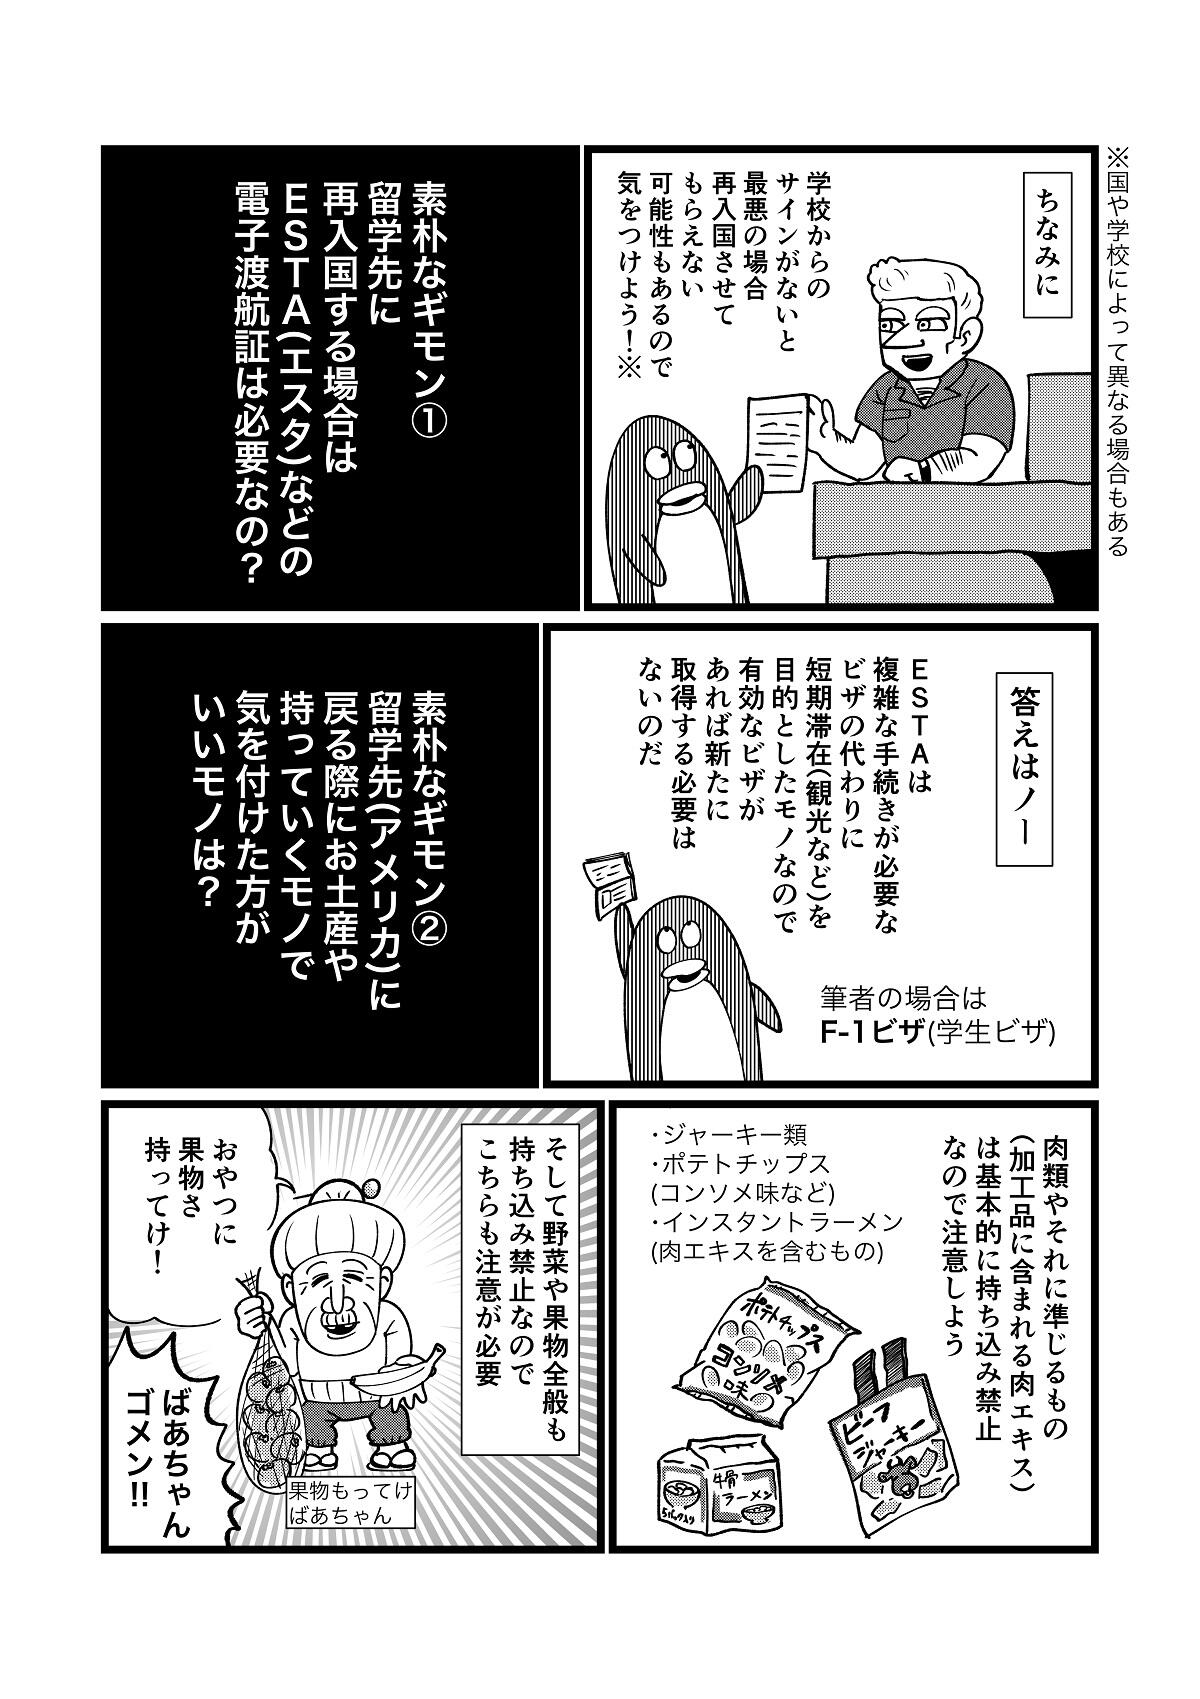 https://www.ryugaku.co.jp/column/images/jawamura23_2_1200.jpg